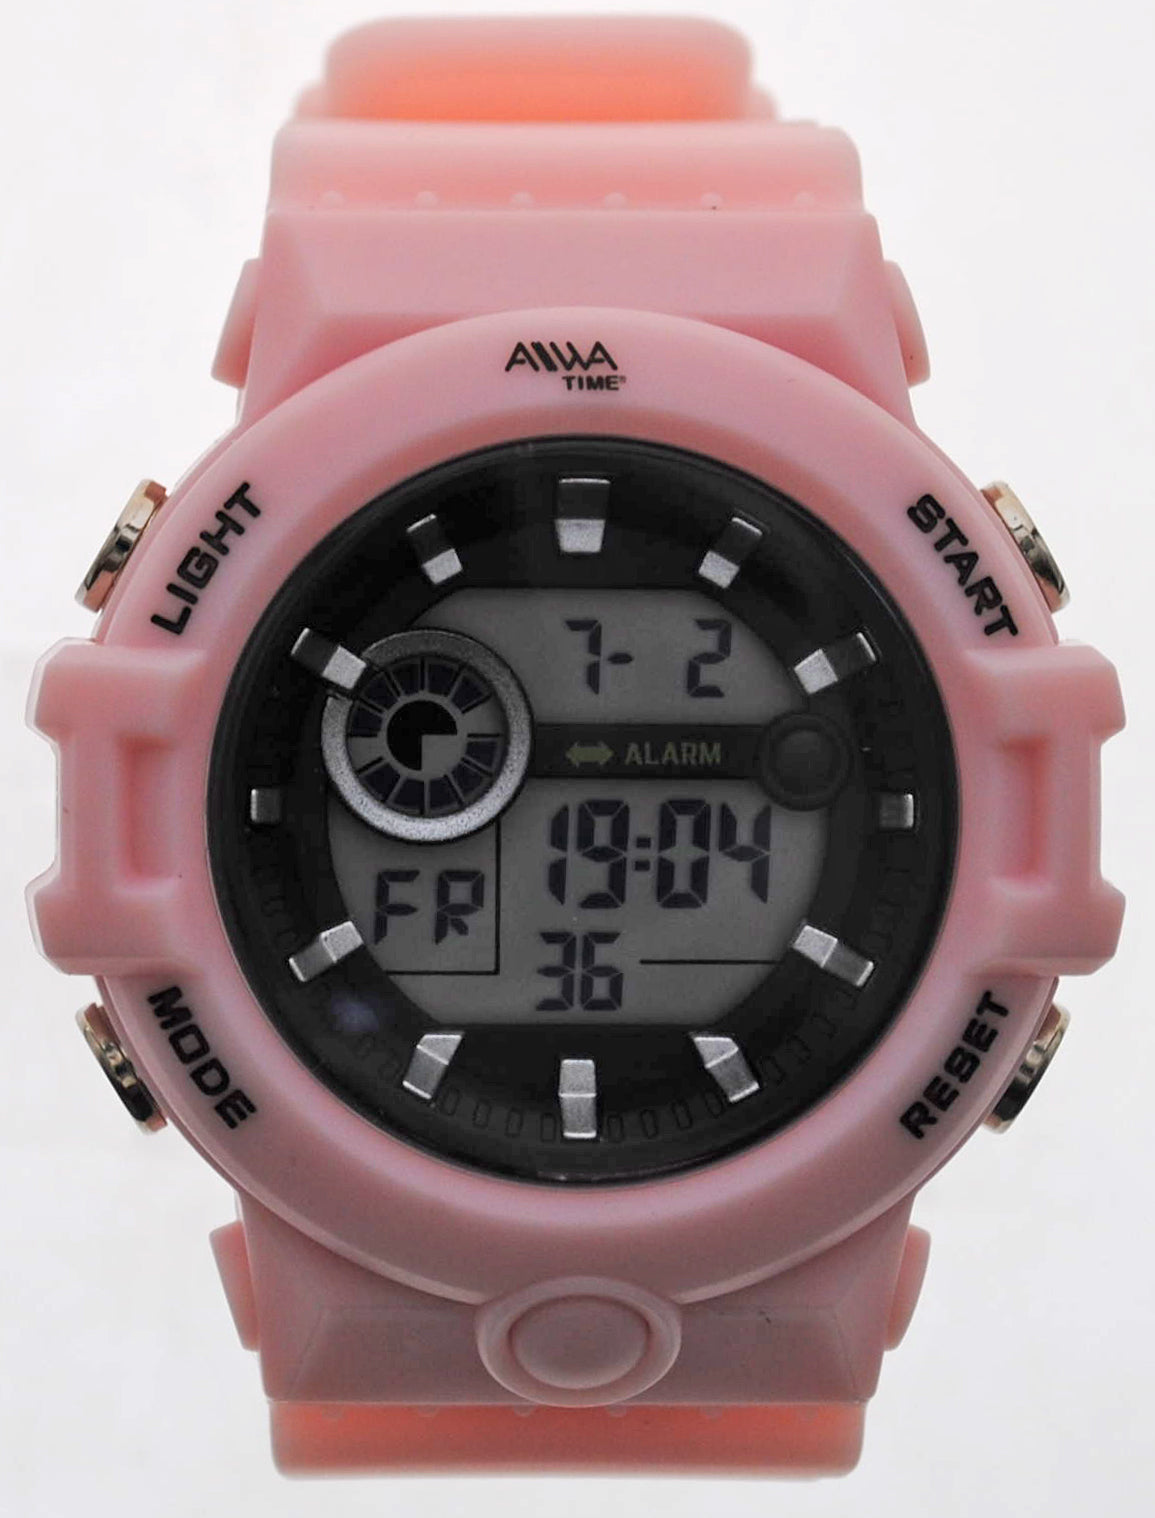 art. 10314 019RS - AIWA Time - Reloj Digital Crono Alarma, Dama, AIWA Time, Sumergible 5 ATM